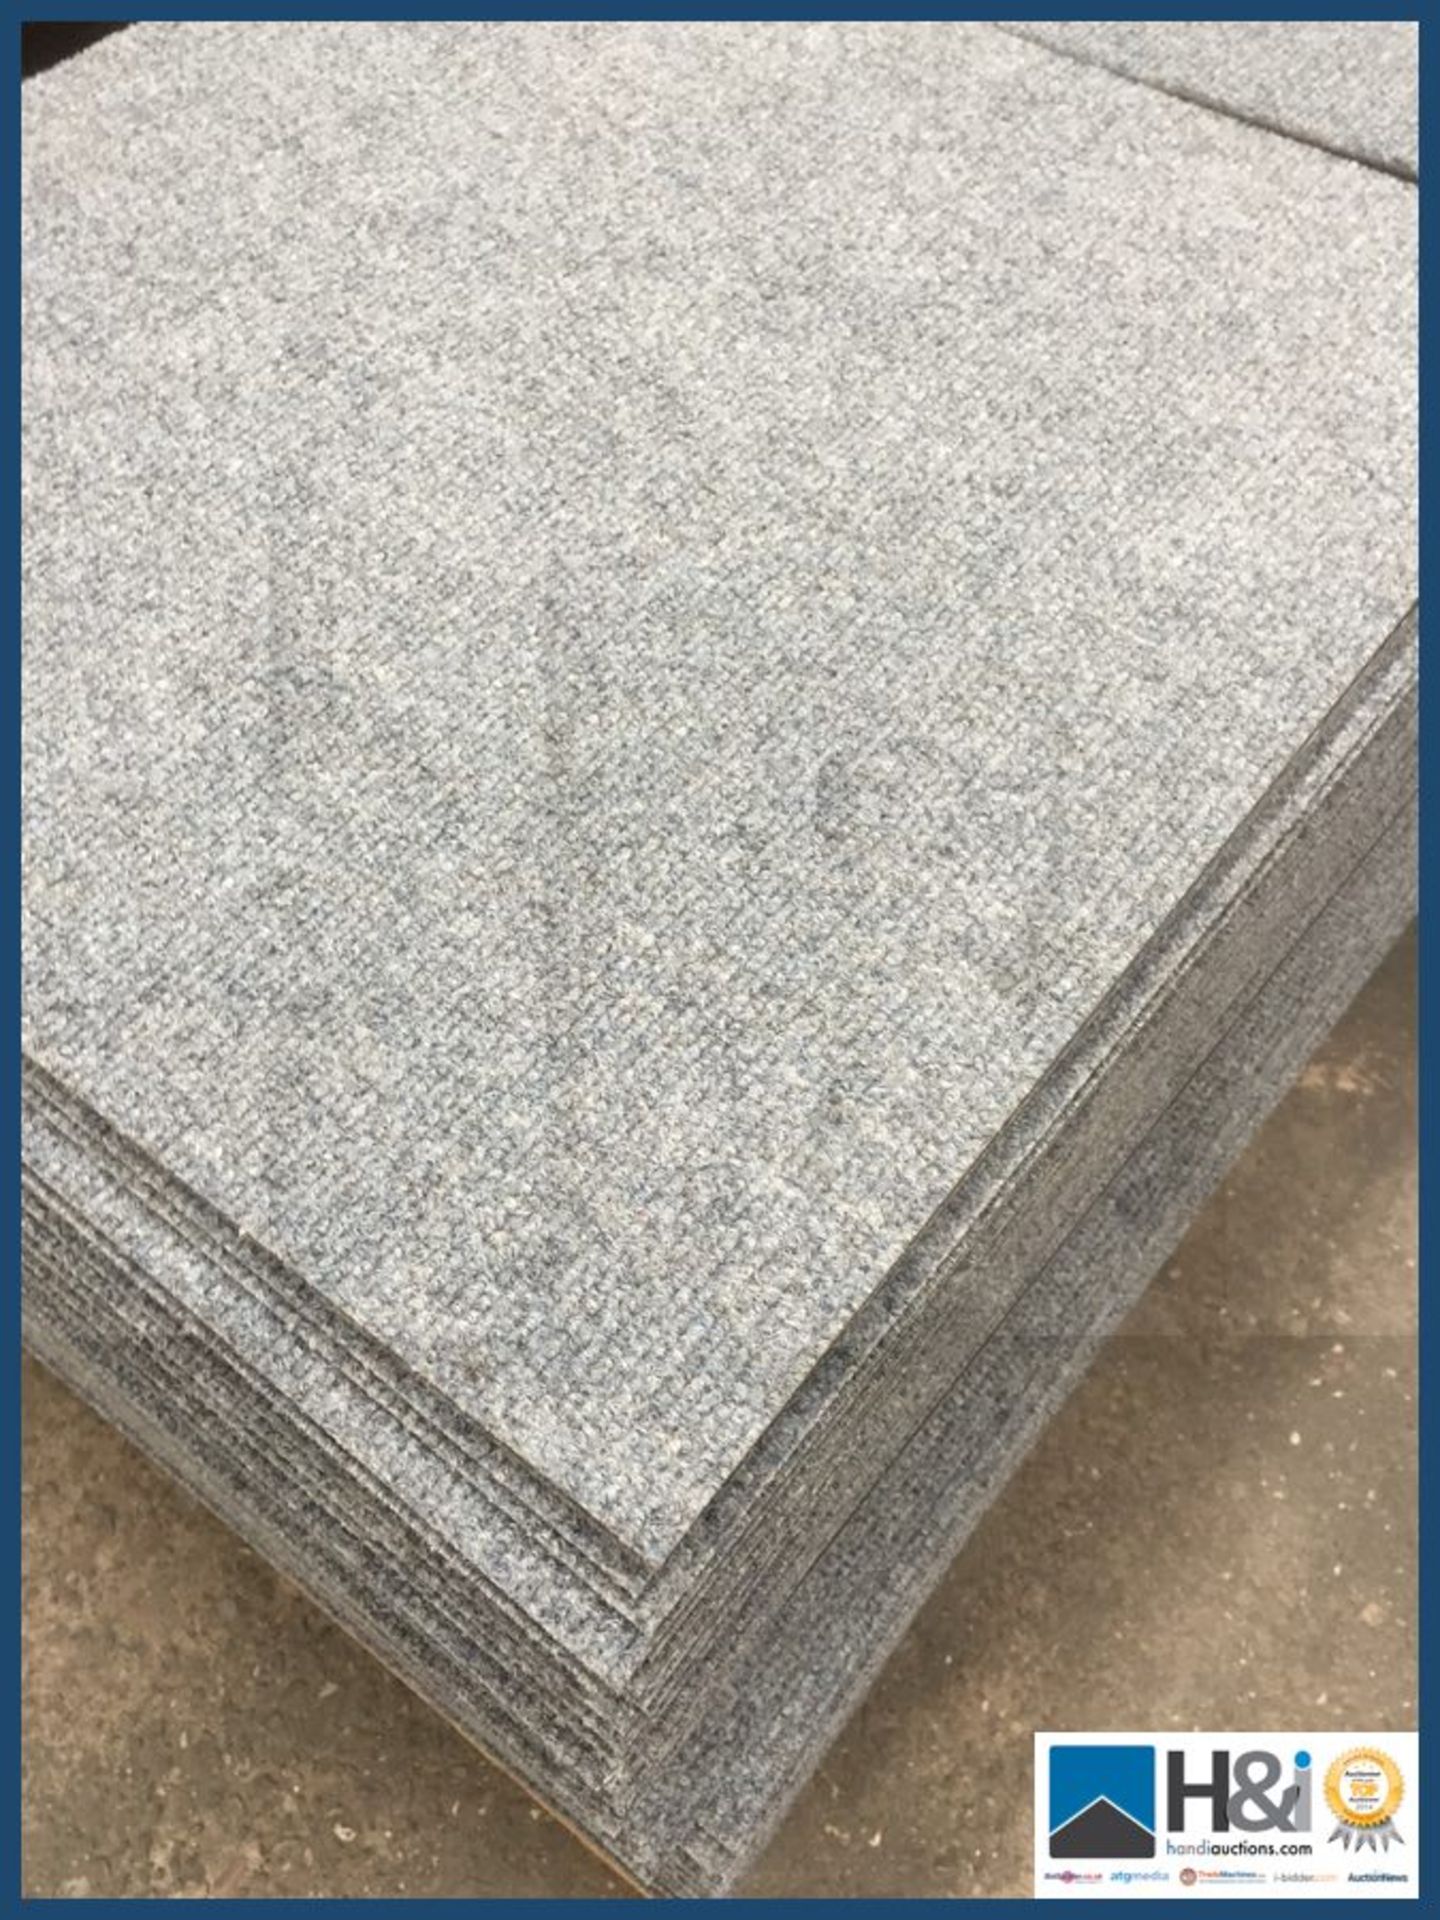 Burmatex contract carpet tiles. Design: Grade. Colour: Silver. 80 tiles per lot total 20m2. RRP GBP - Image 2 of 3